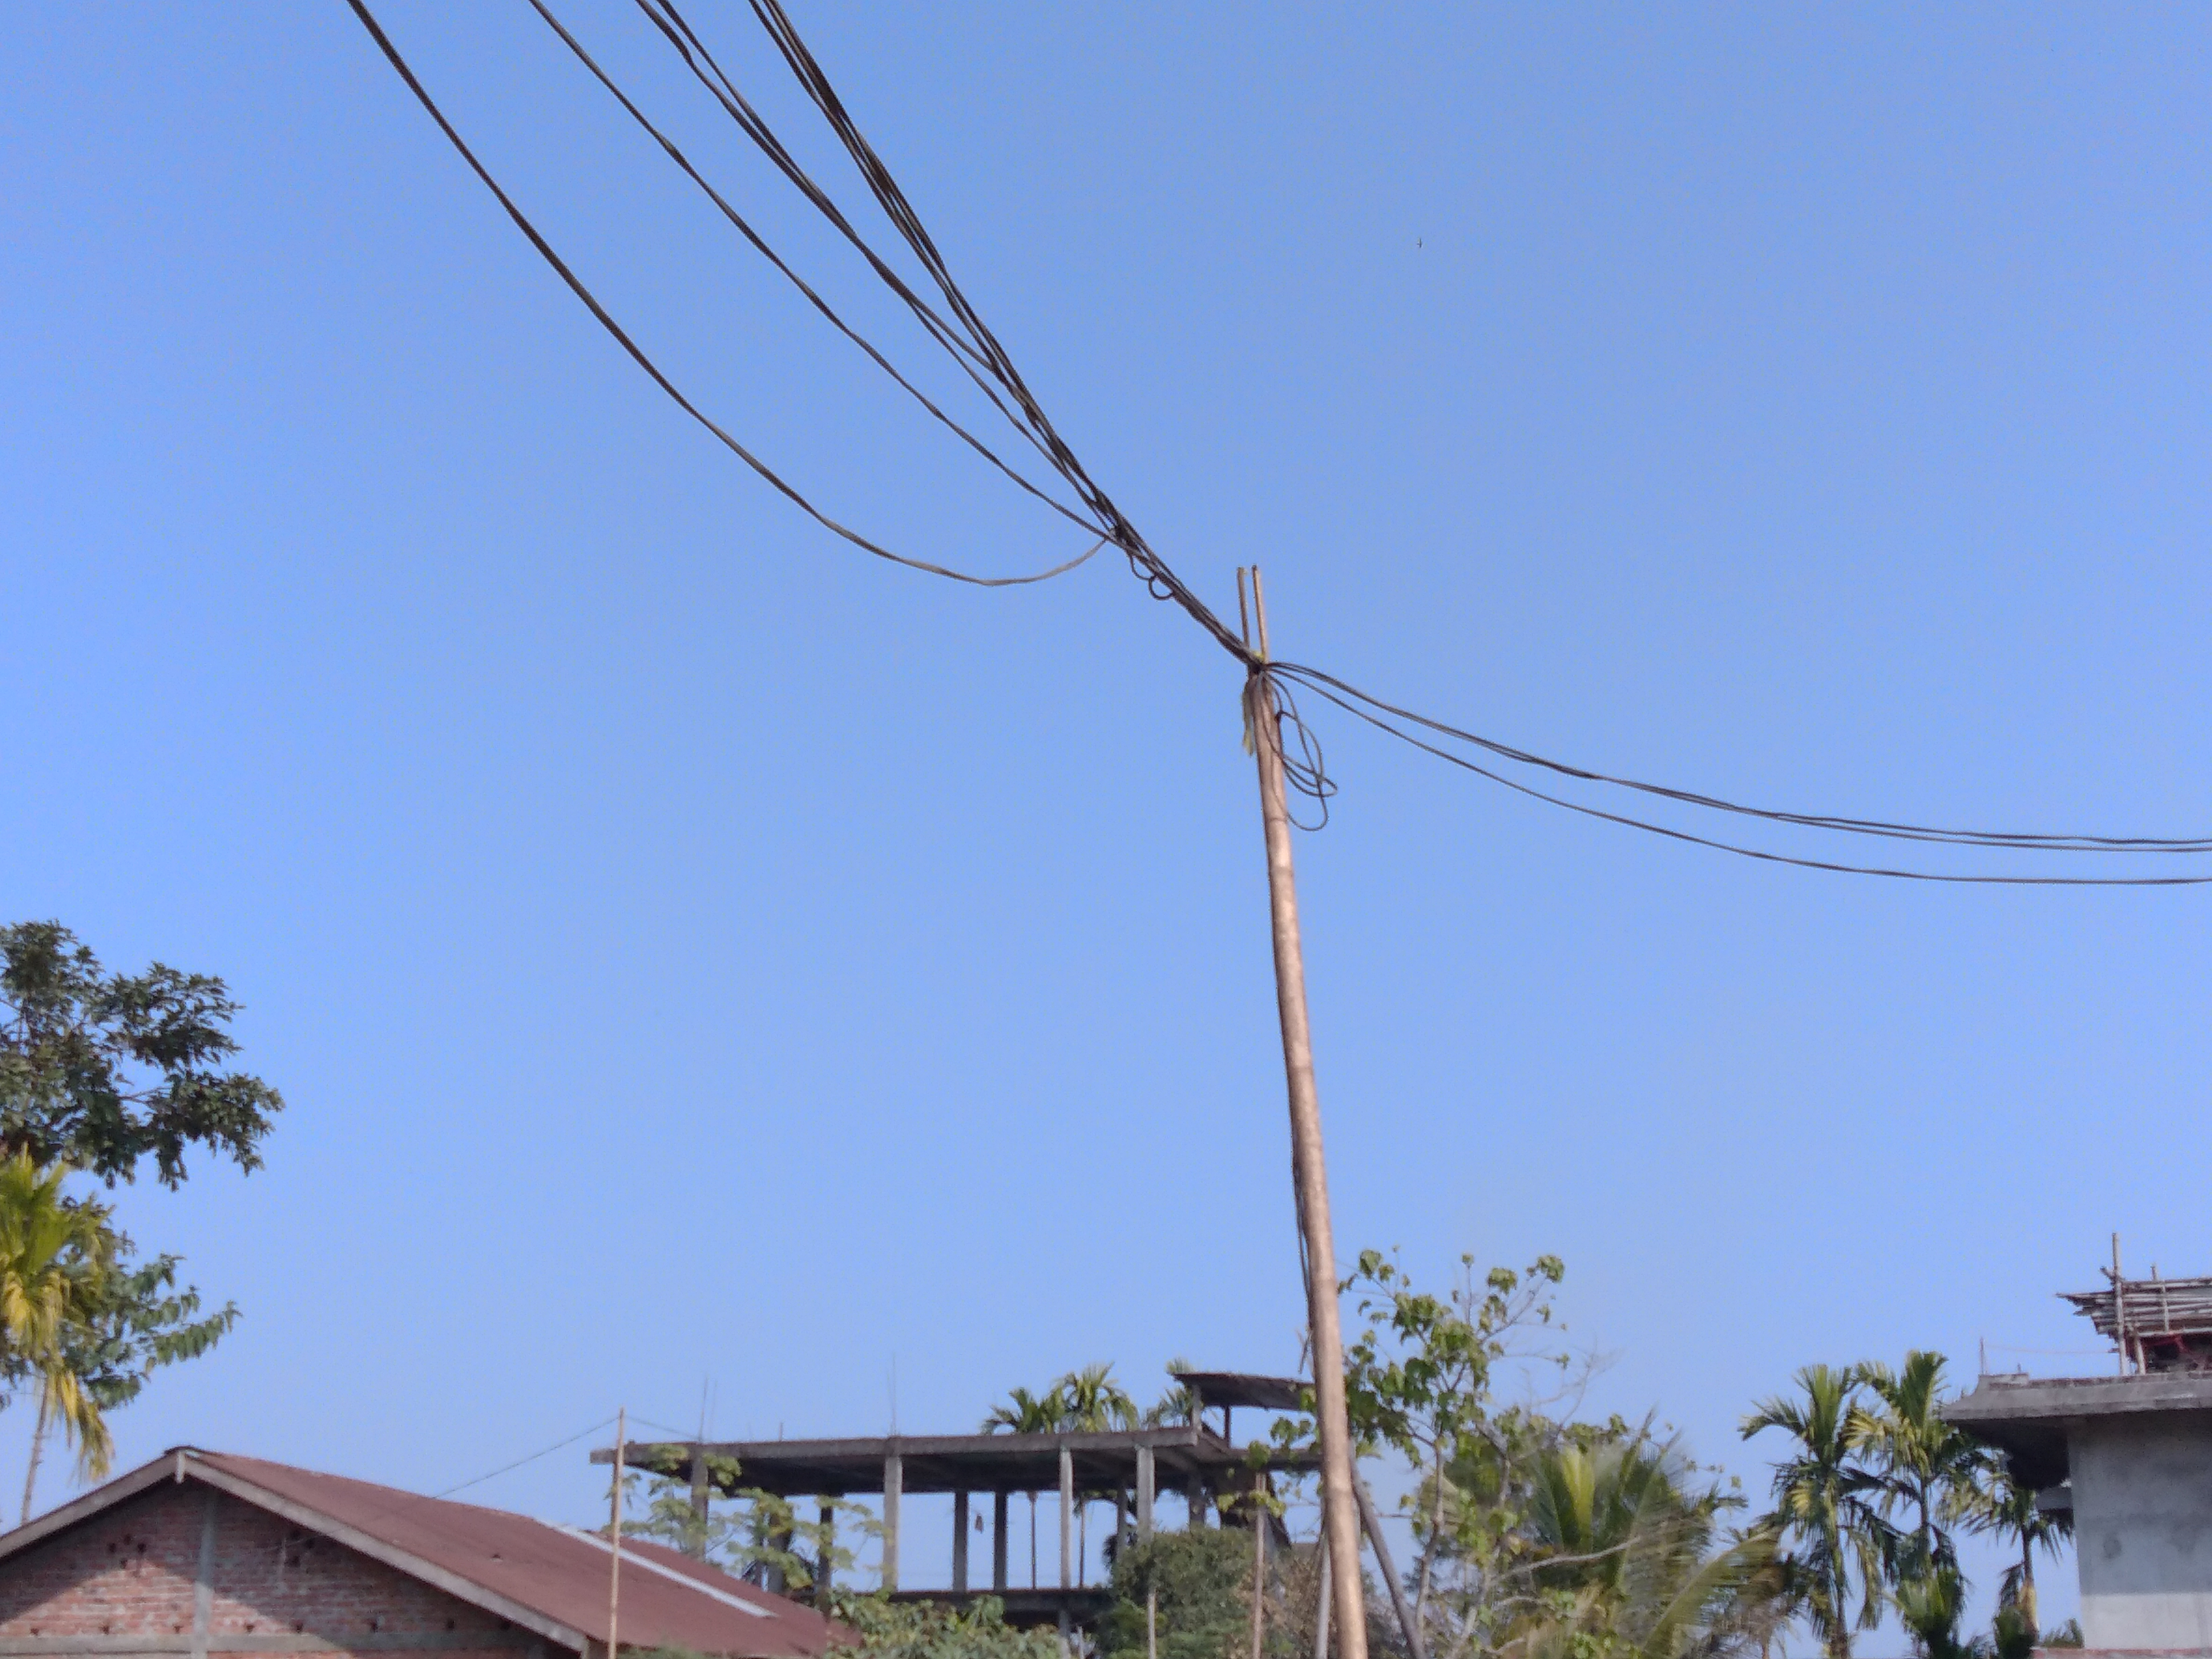 Dangerous electrical connection in Lakhimpur